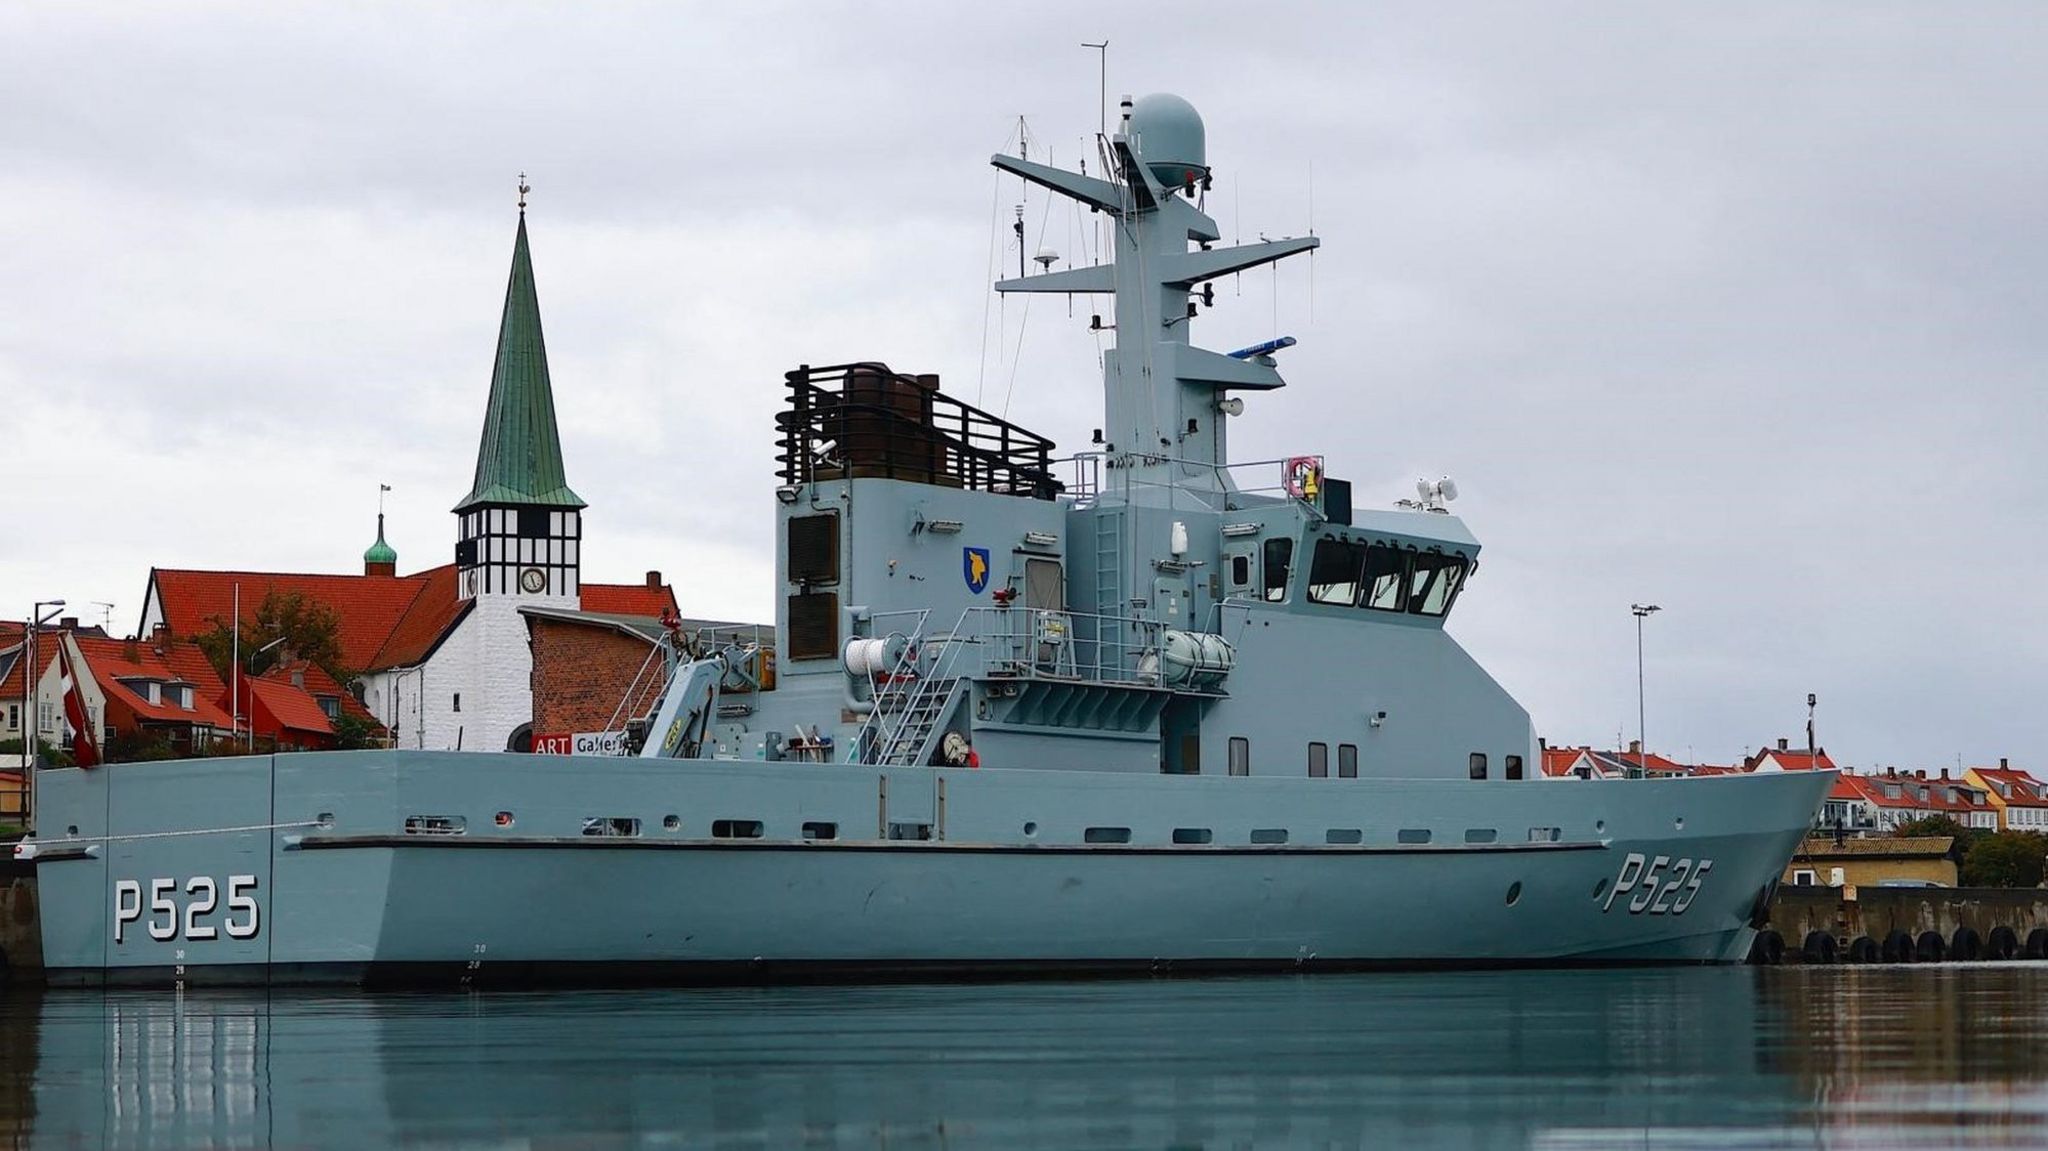 A Danish navy vessel